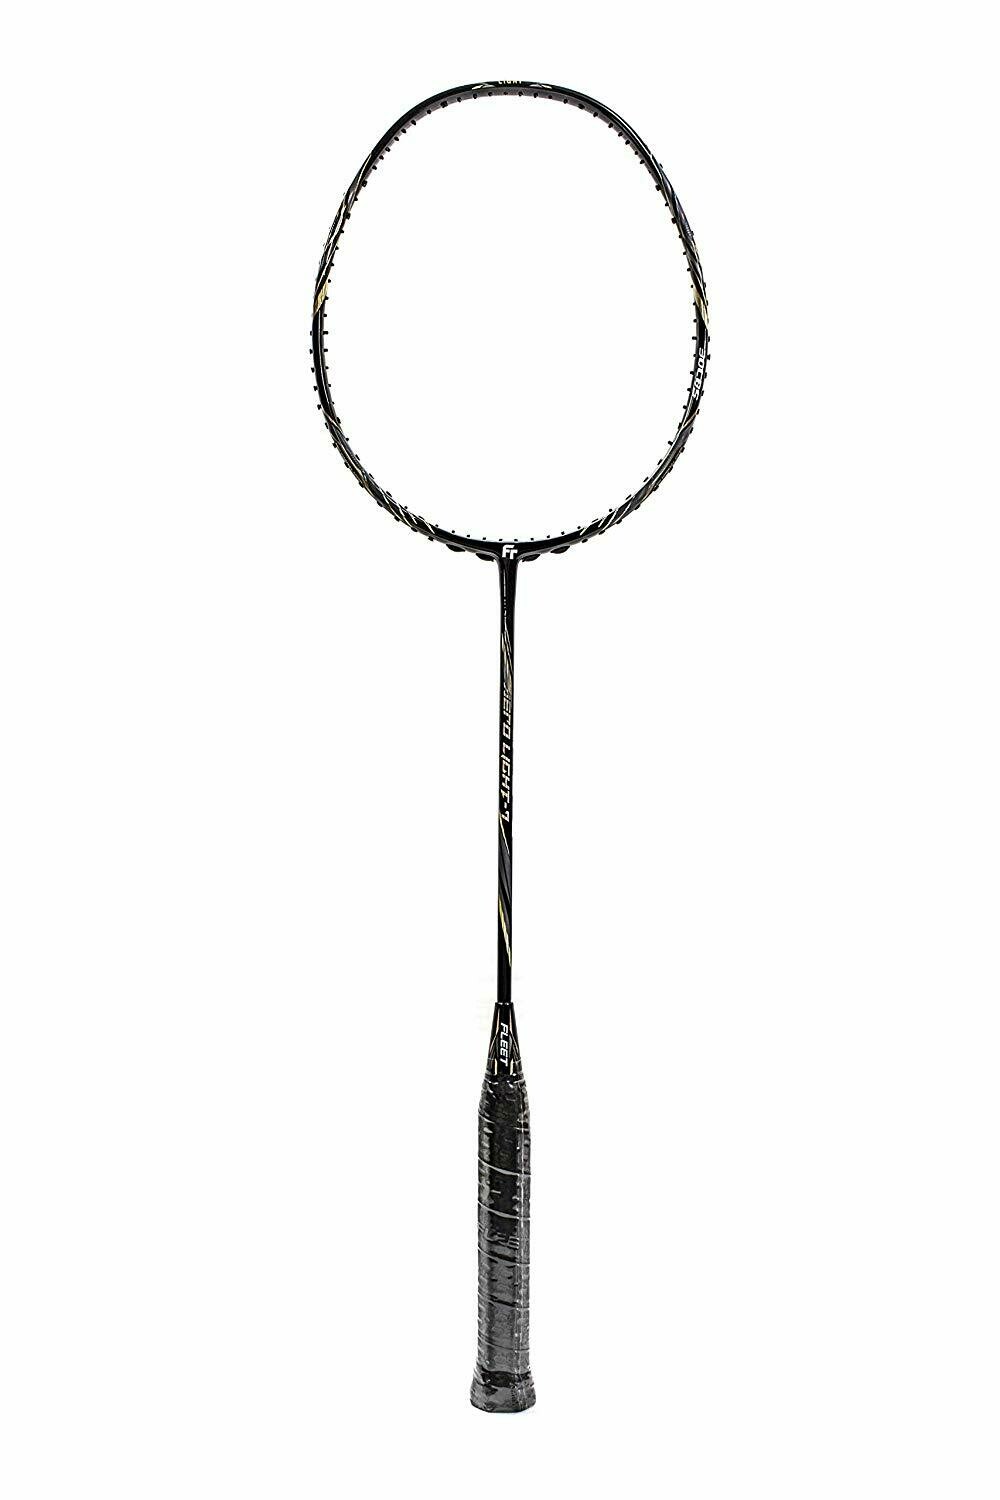 Fleet AERO Light 7 Badminton Racquet